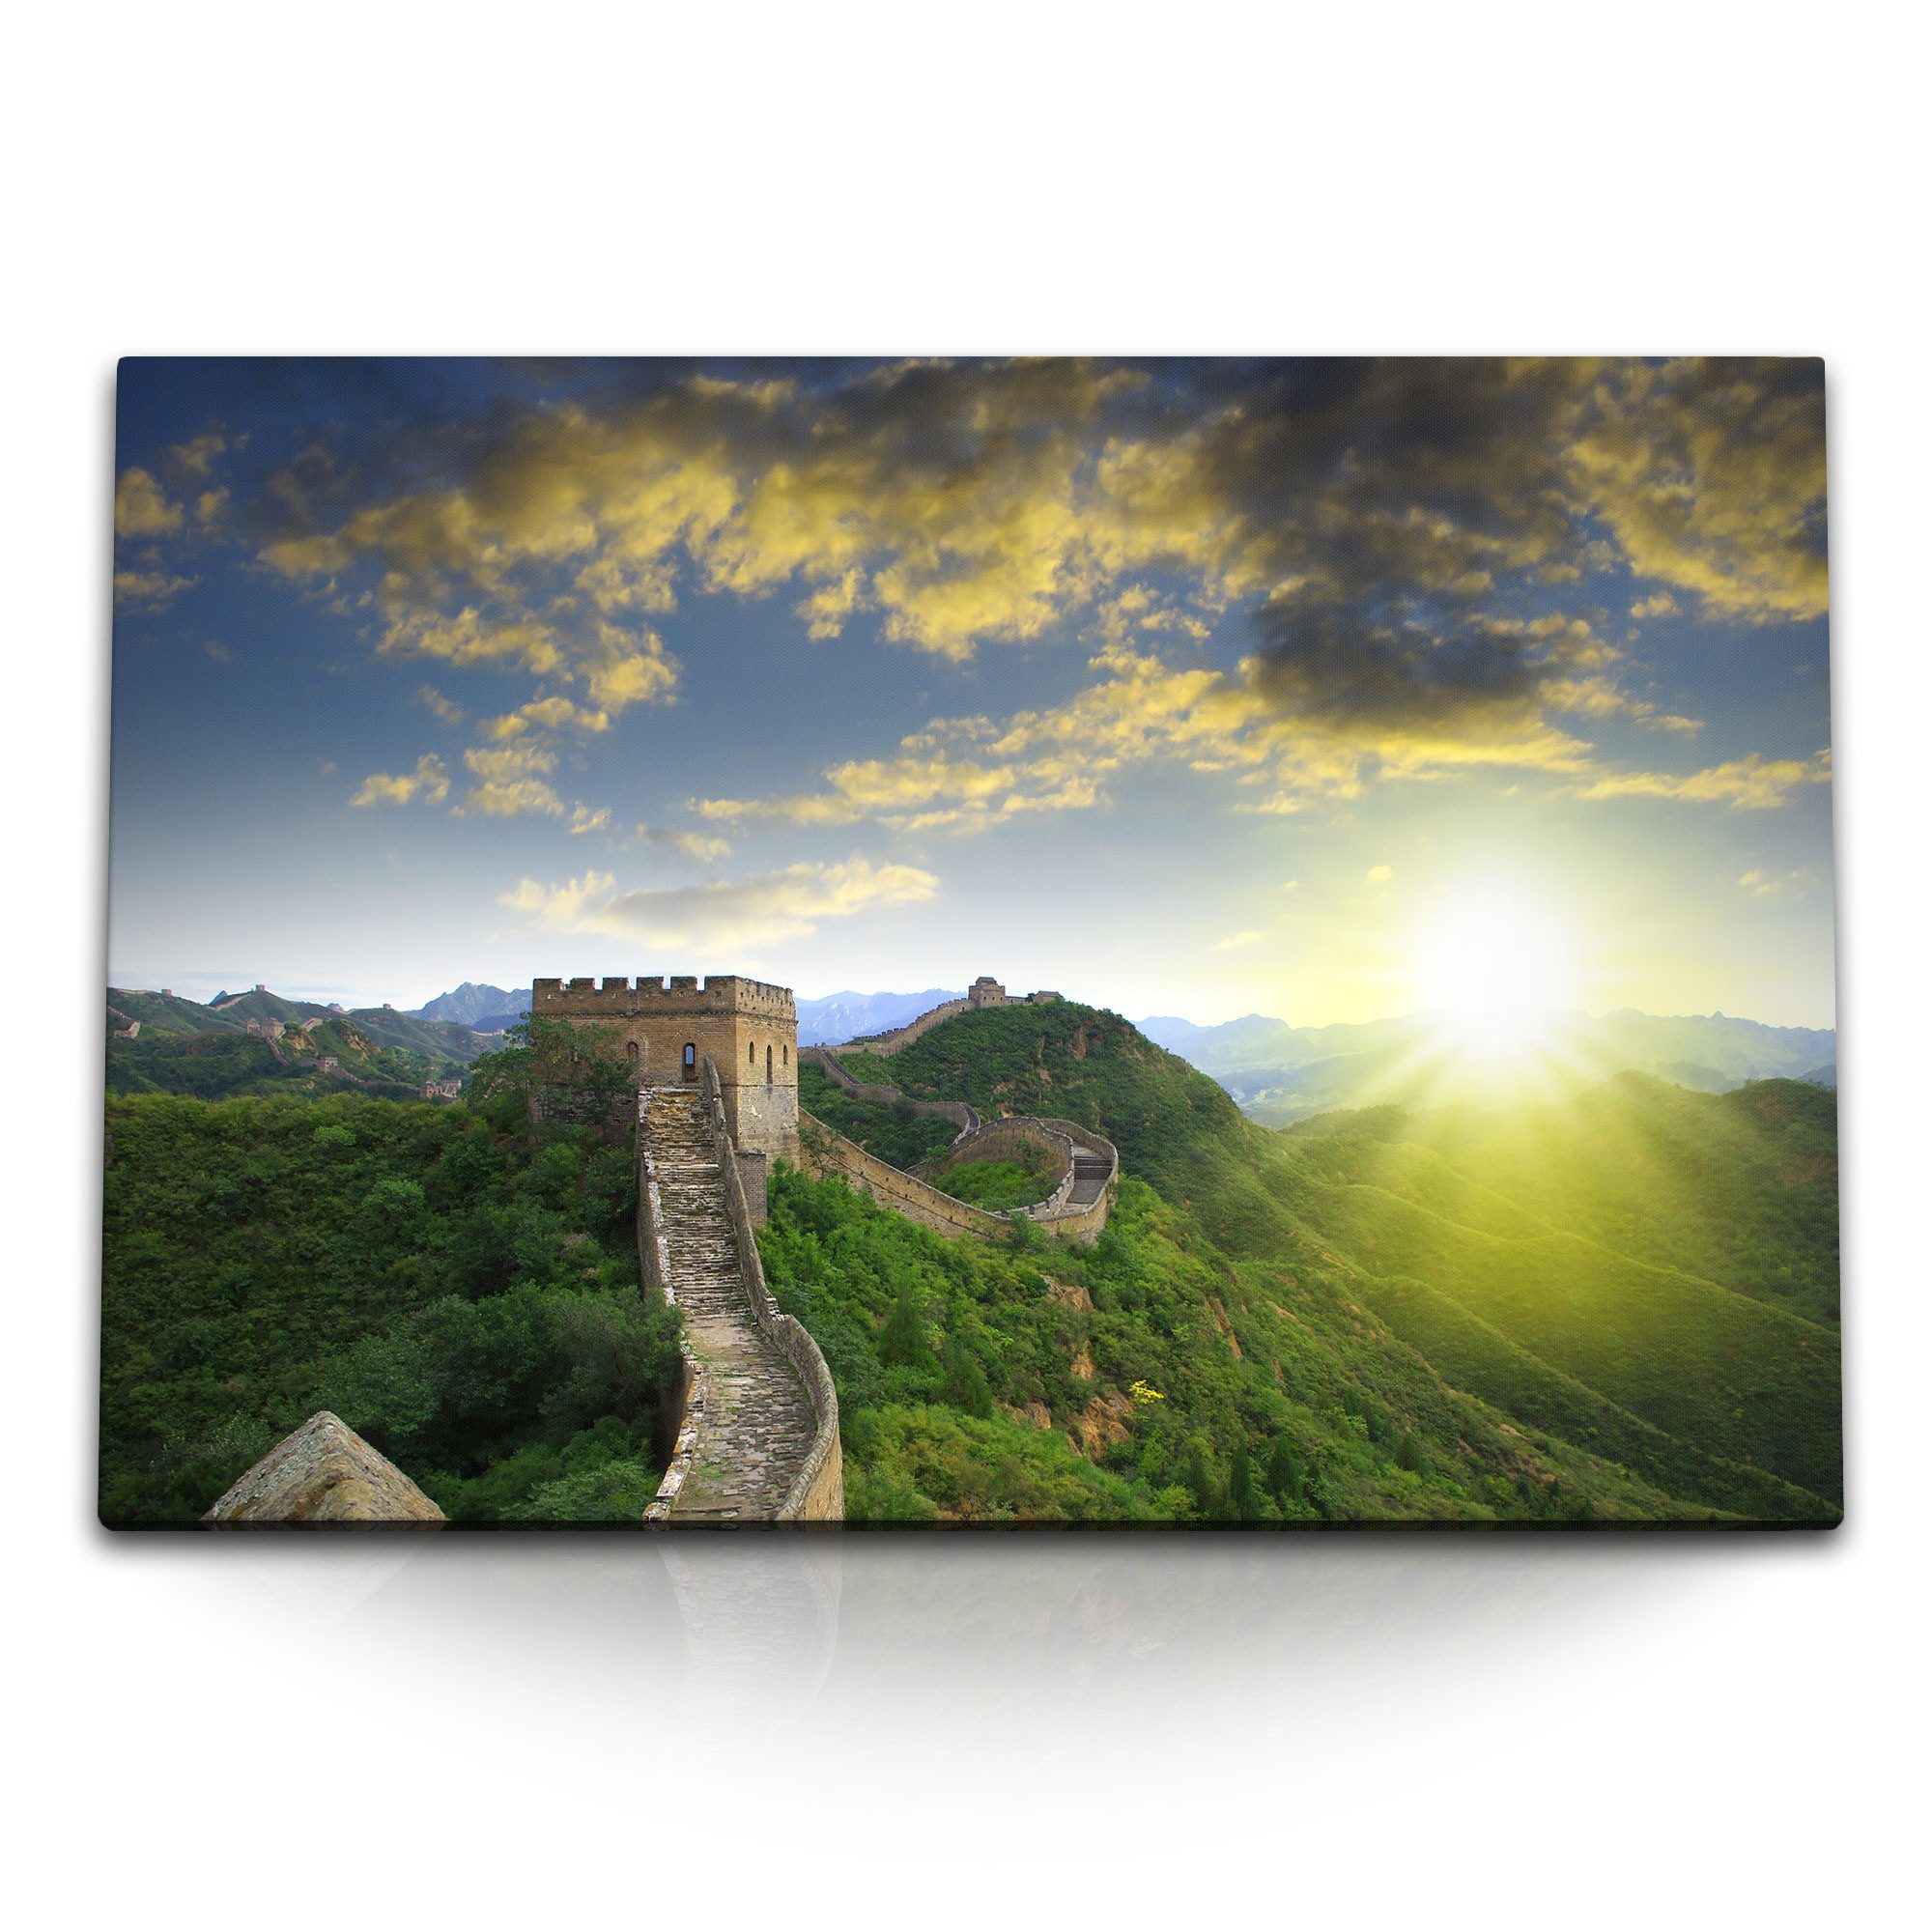 Sinus Art Leinwandbild 120x80cm Wandbild auf Leinwand Chinesische Mauer Asien Sonnenuntergang, (1 St)